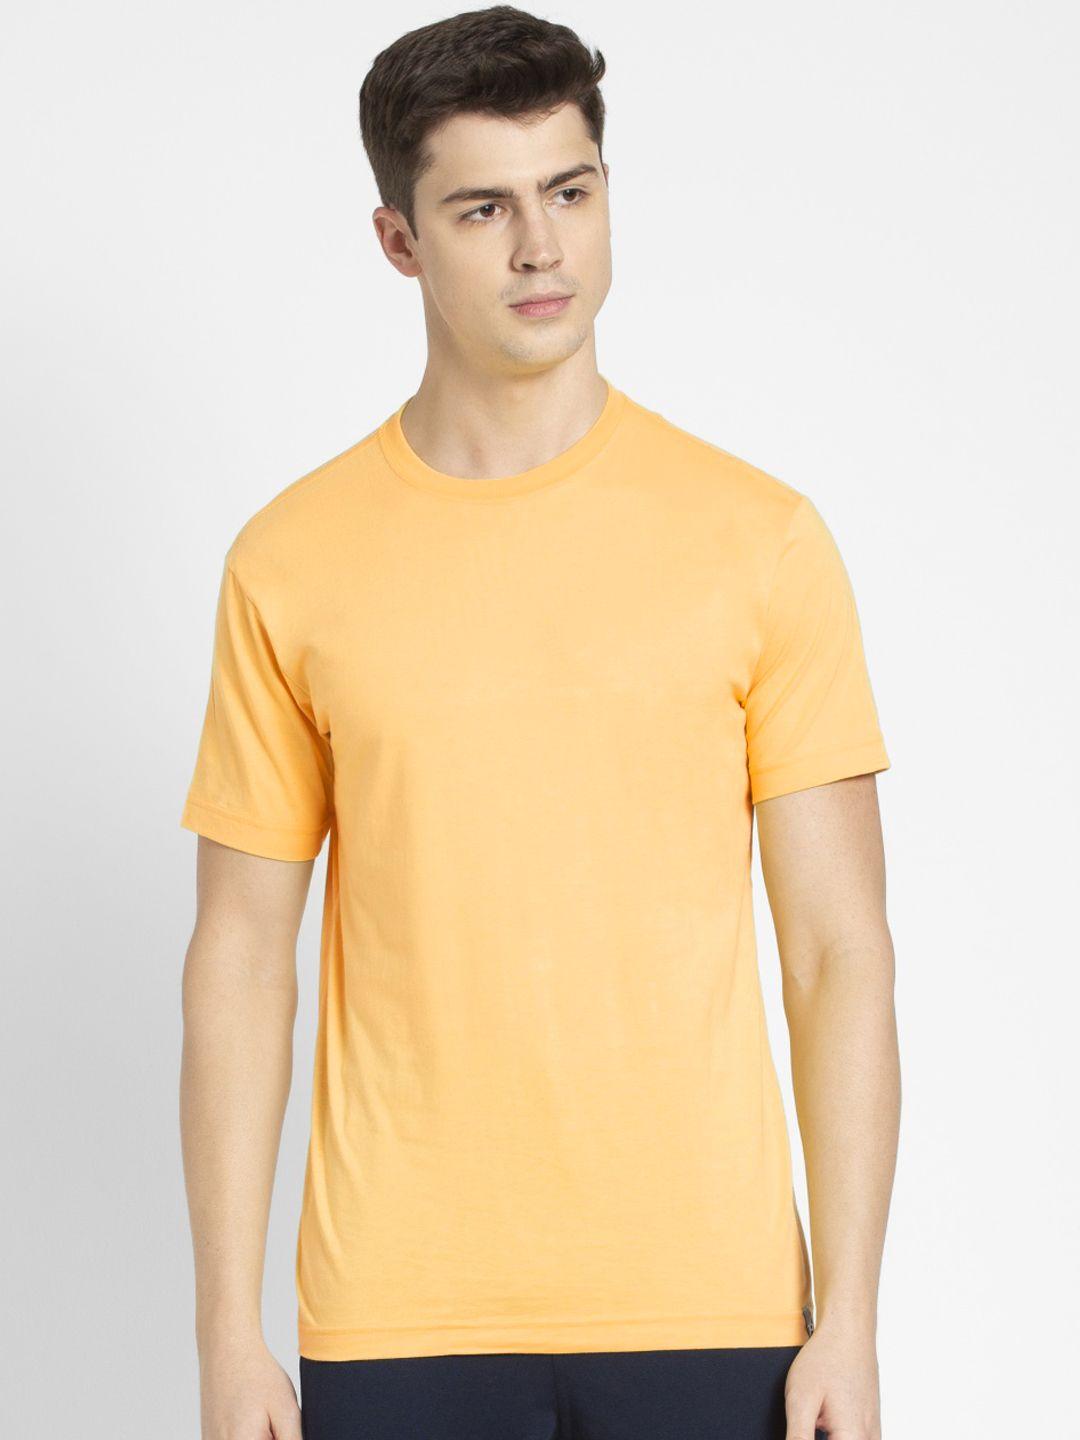 jockey-men-yellow-solid-round-neck-sports-t-shirt